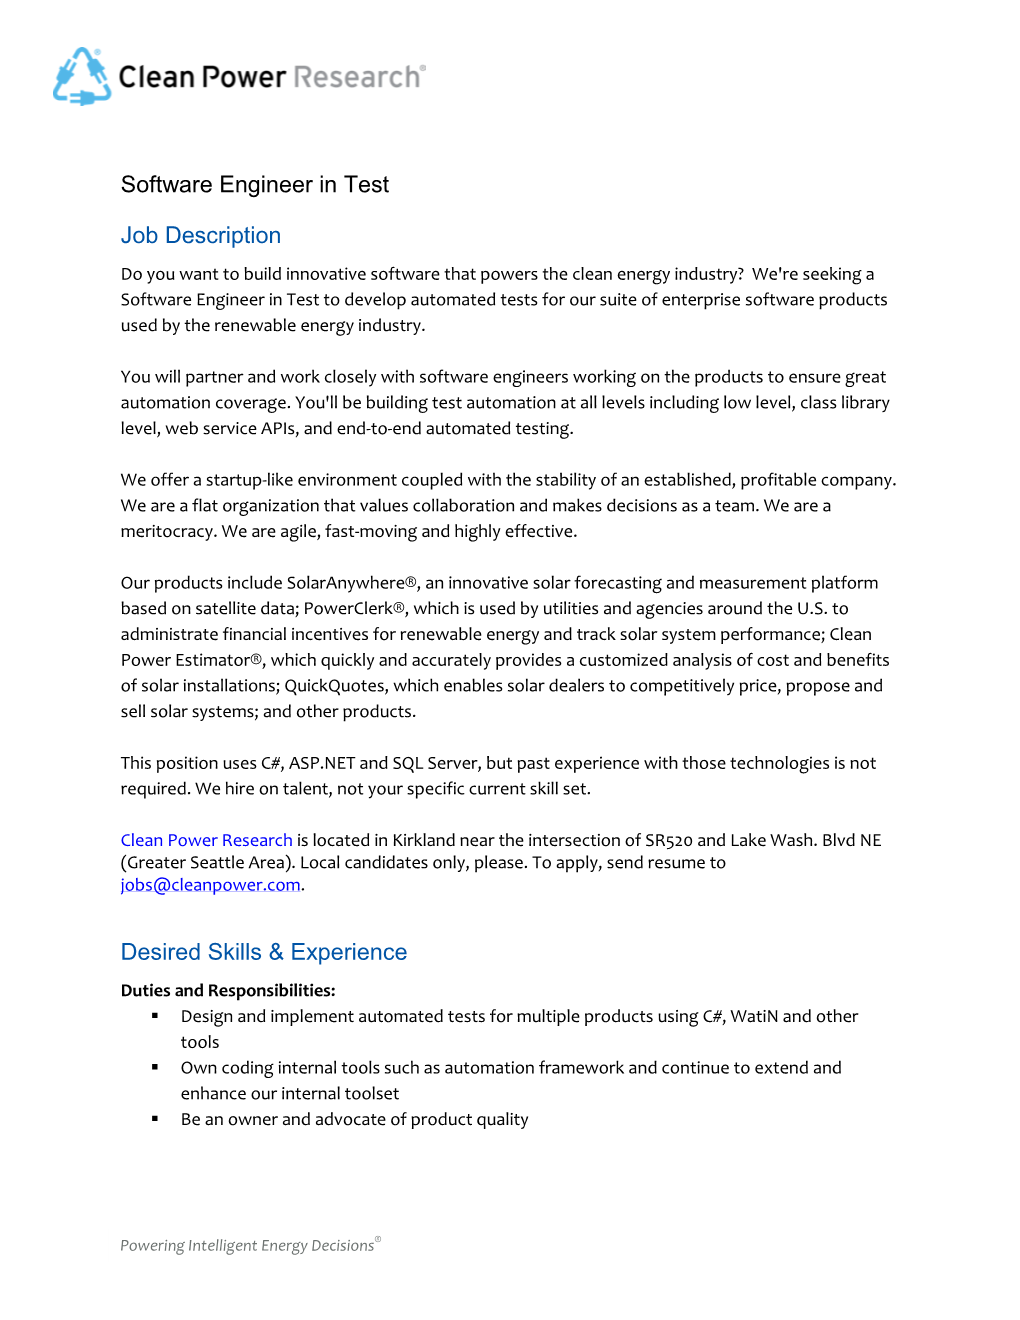 Software Engineer in Test Job Description Desired Skills